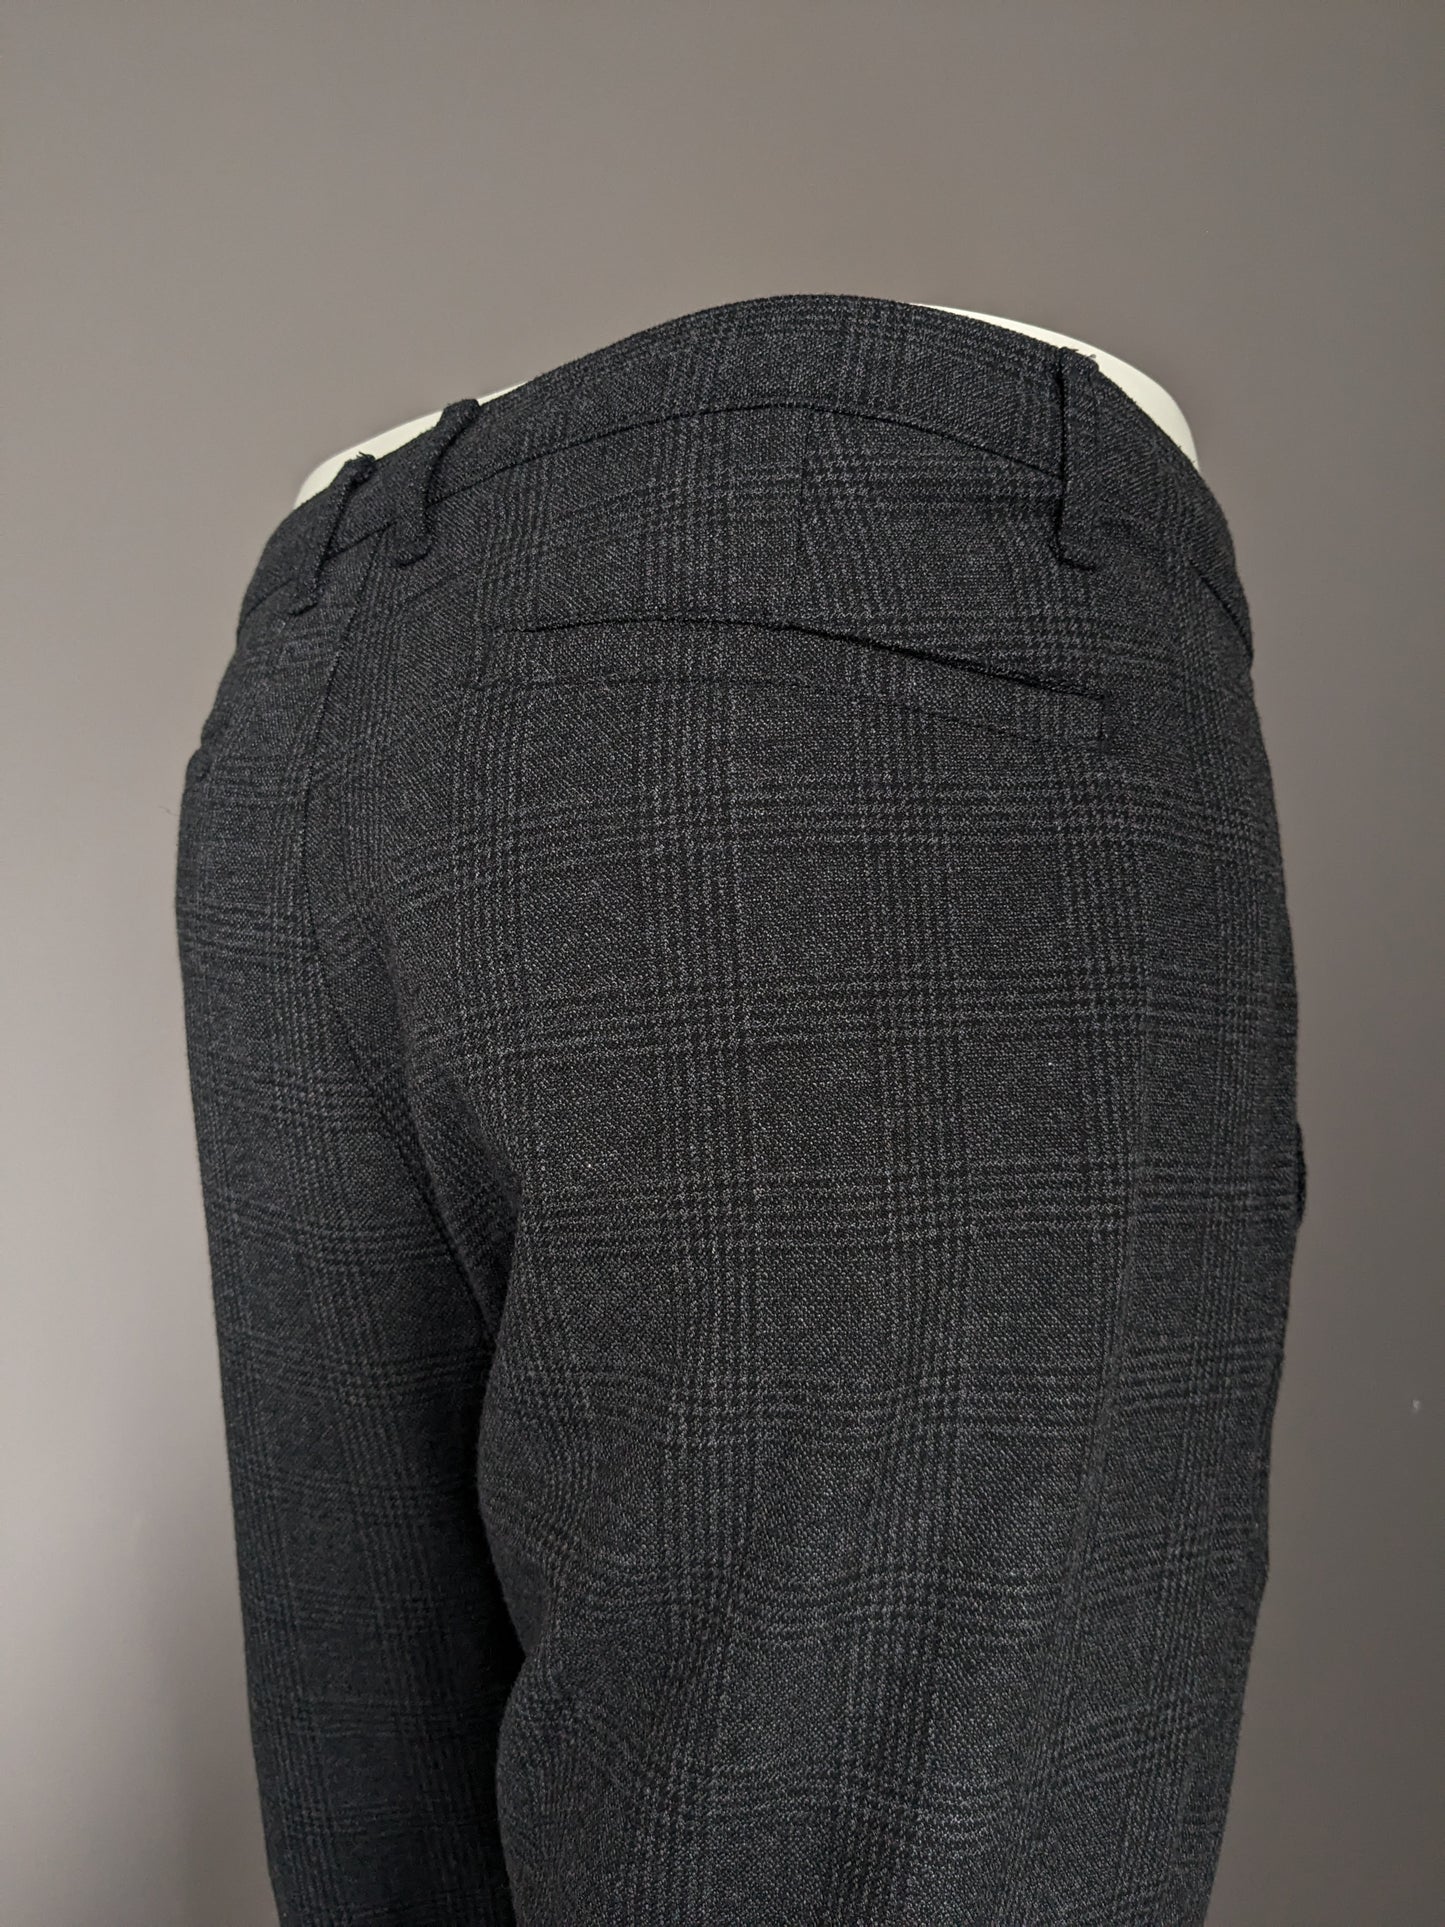 Pantalones / pantalones LCW Vision. Negro gris revisado. Fit delgado recortado. W36 - L30.